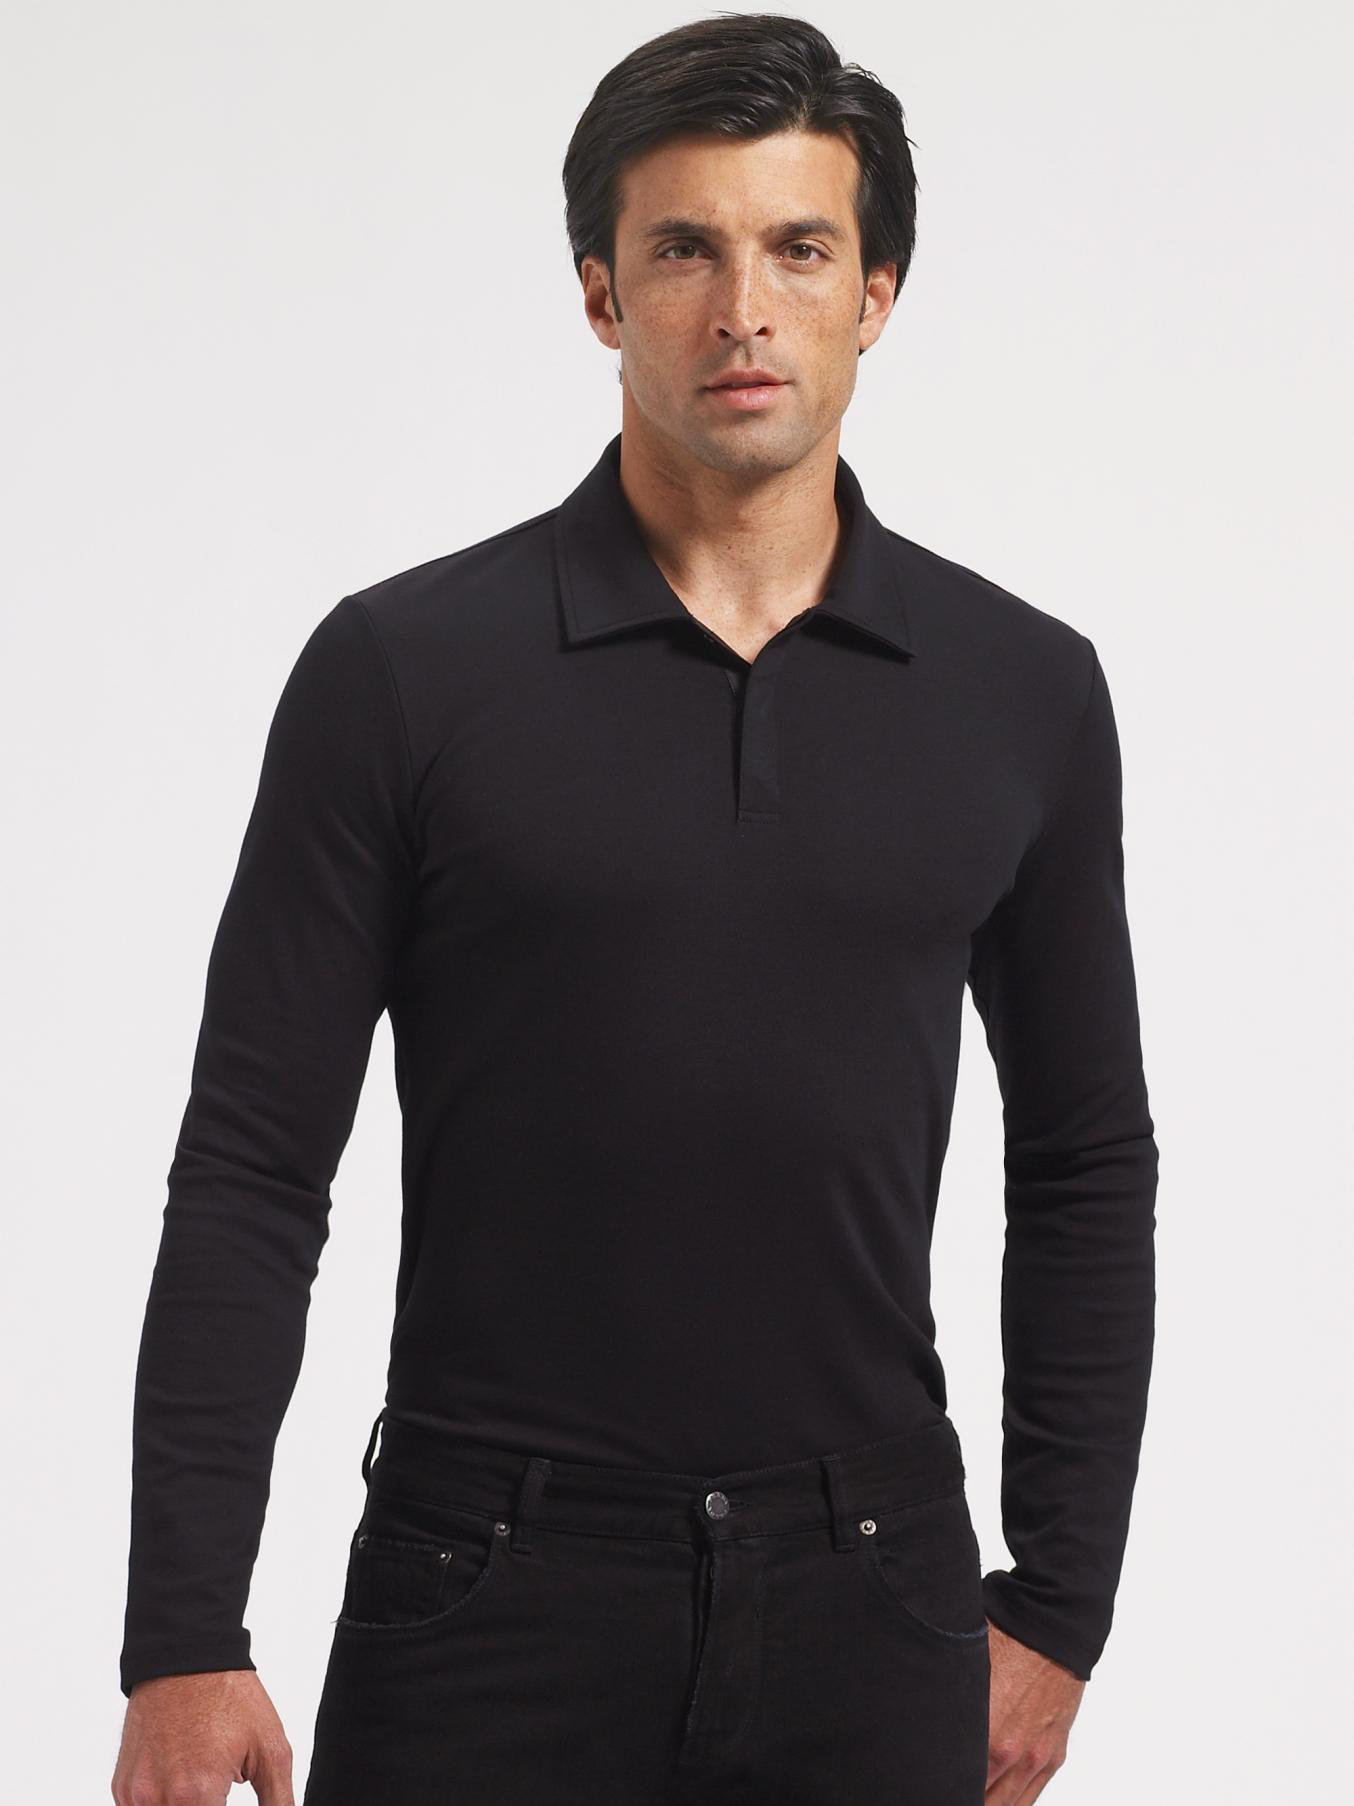 Prada Longsleeve Polo in Black for Men - Lyst